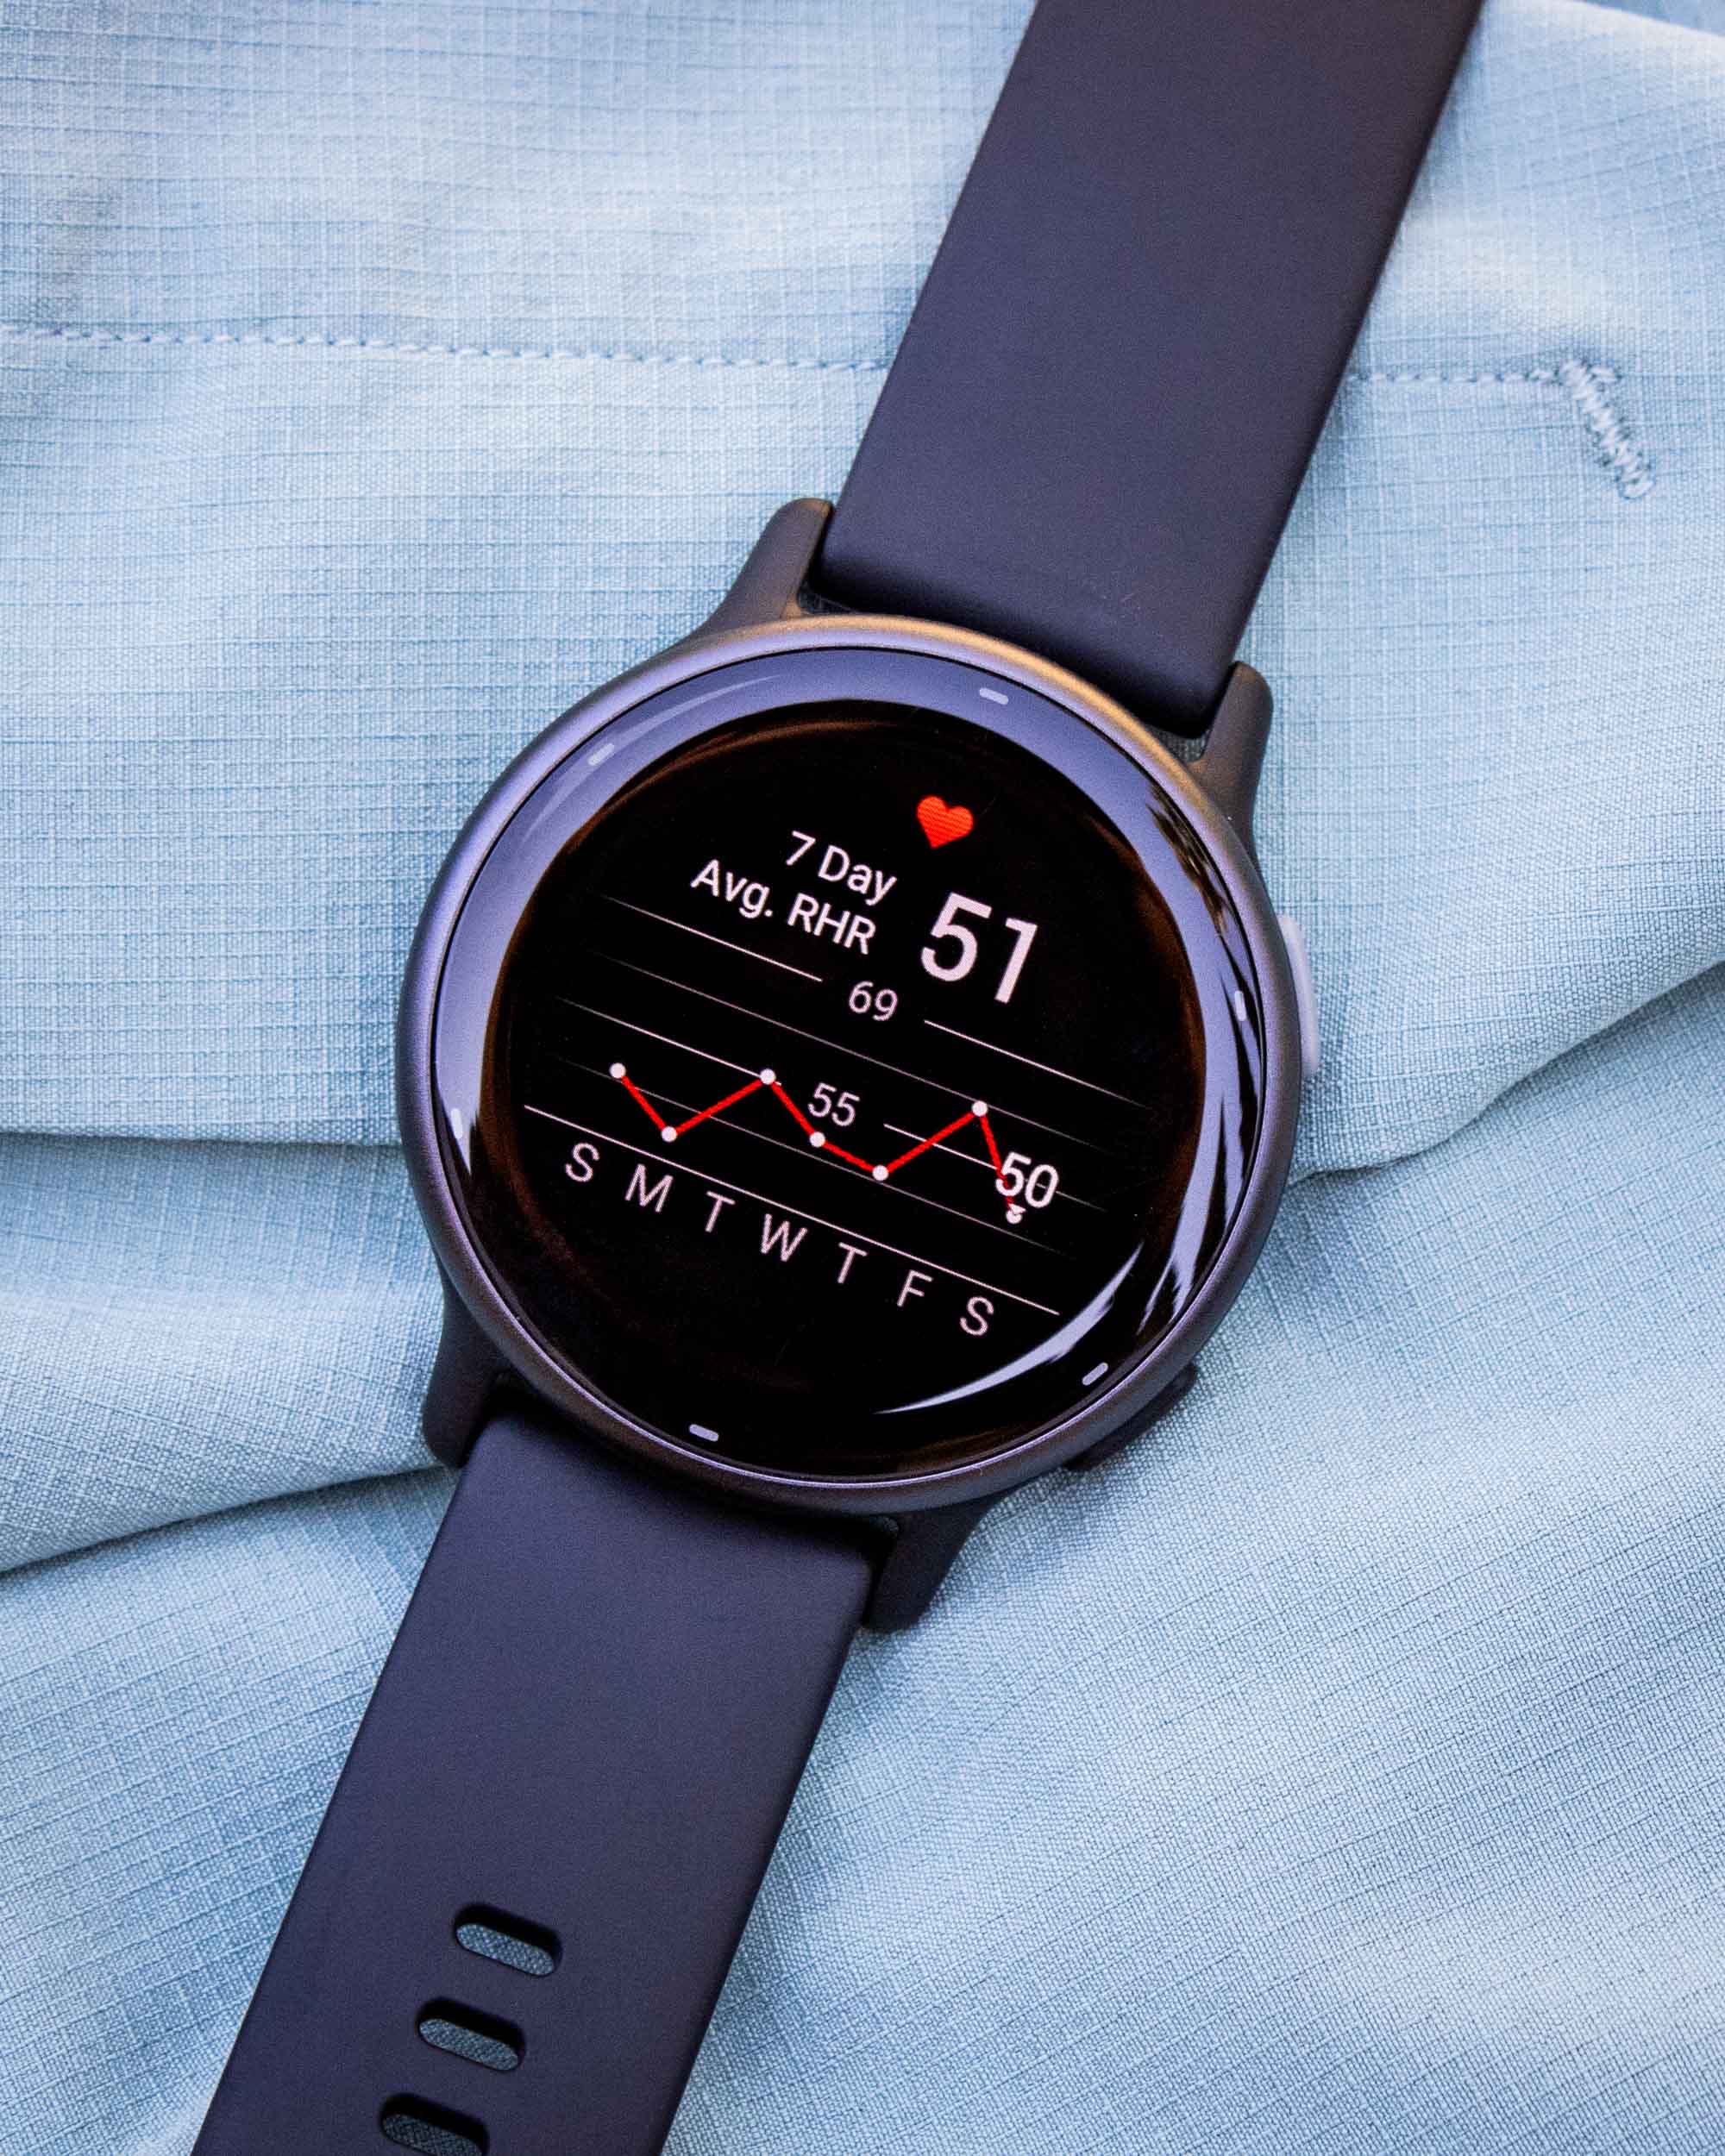 Garmin's Vivoactive 5 Fitness Smartwatch Is a Cheaper Apple Watch